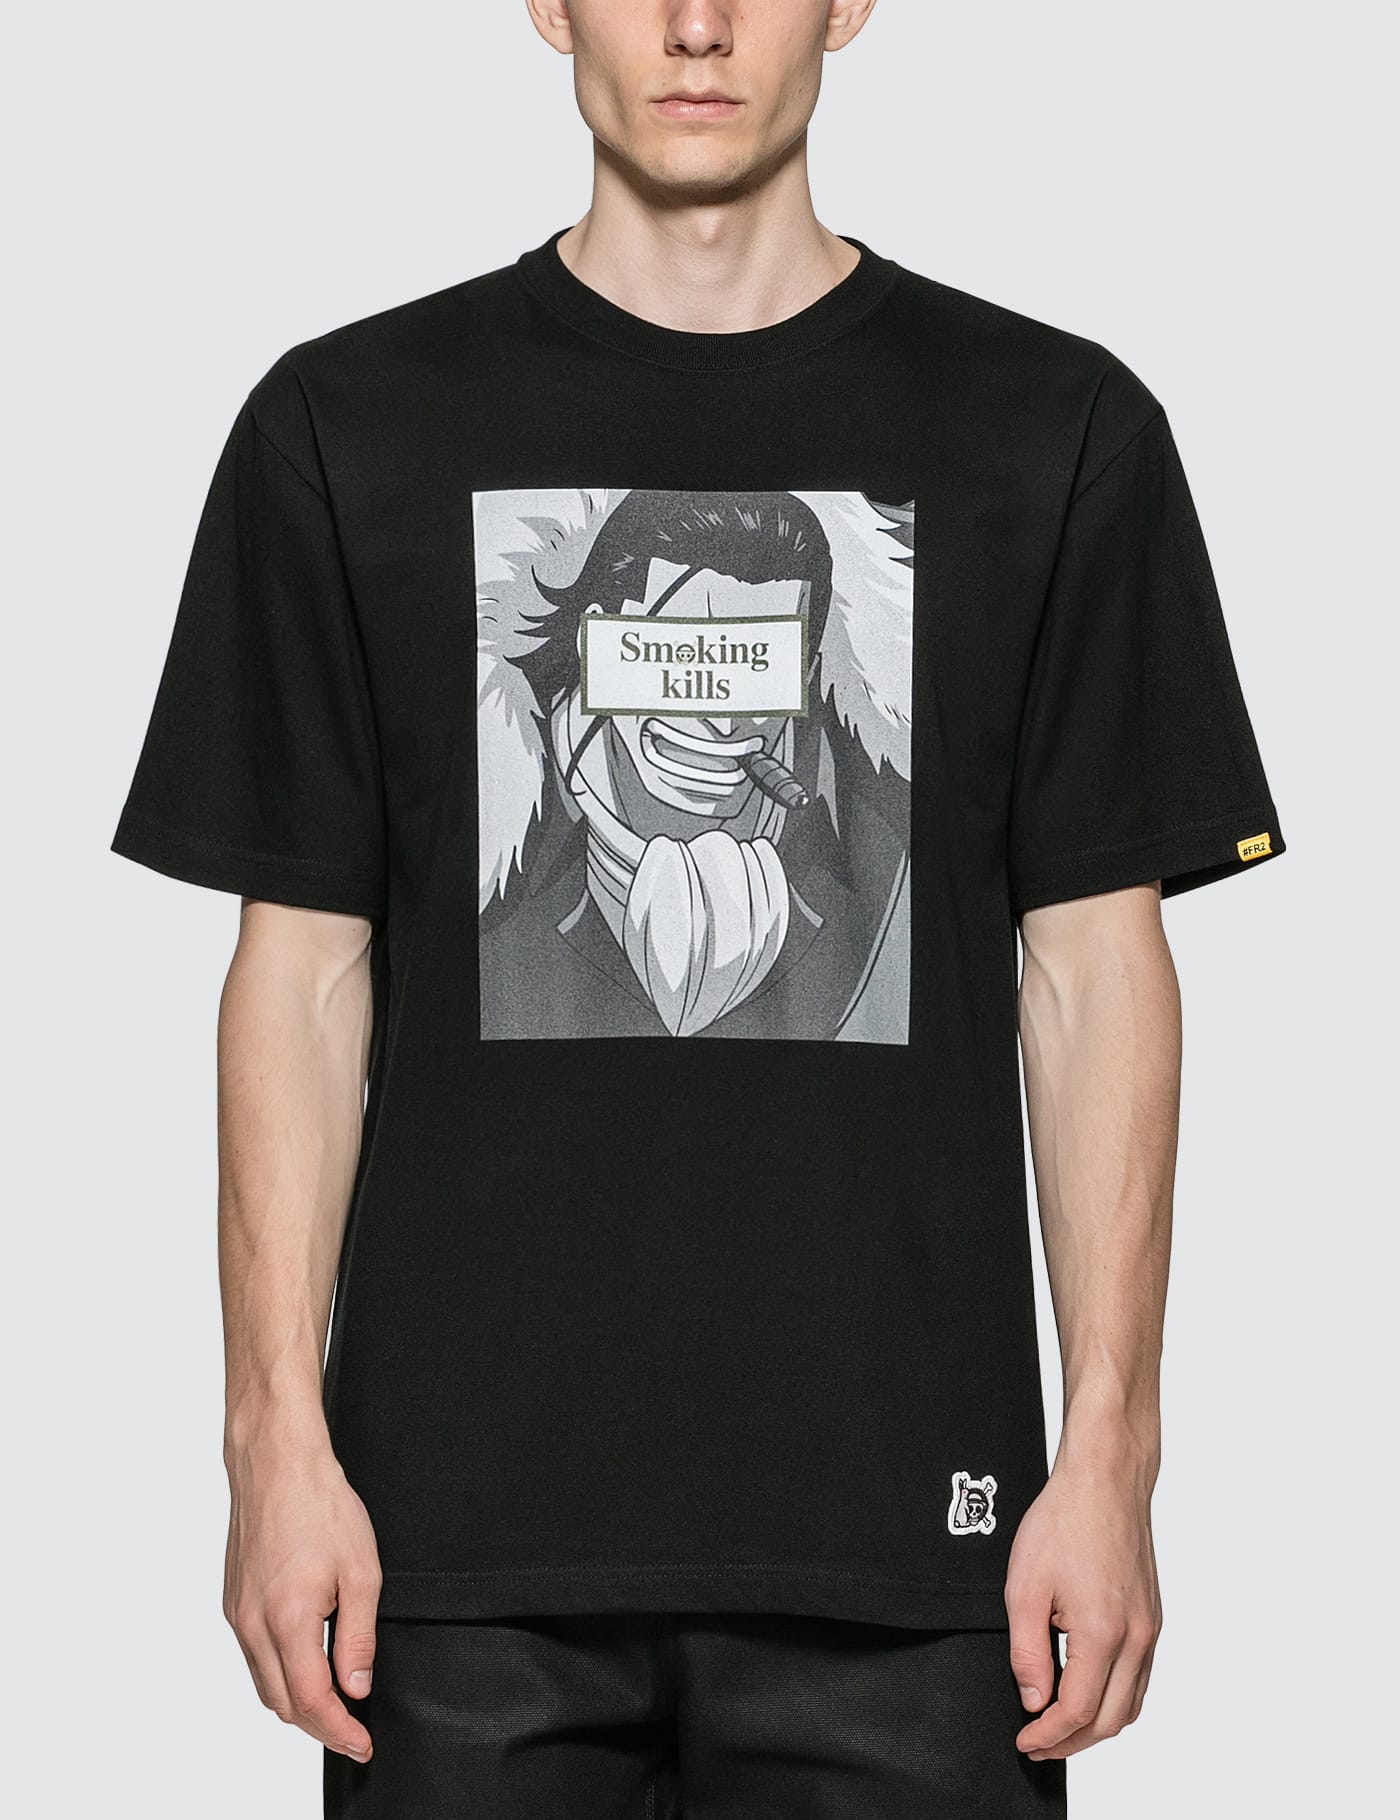 FR2 - #FR2 X One Piece Crocodile Smokers T-shirt | HBX - HYPEBEAST